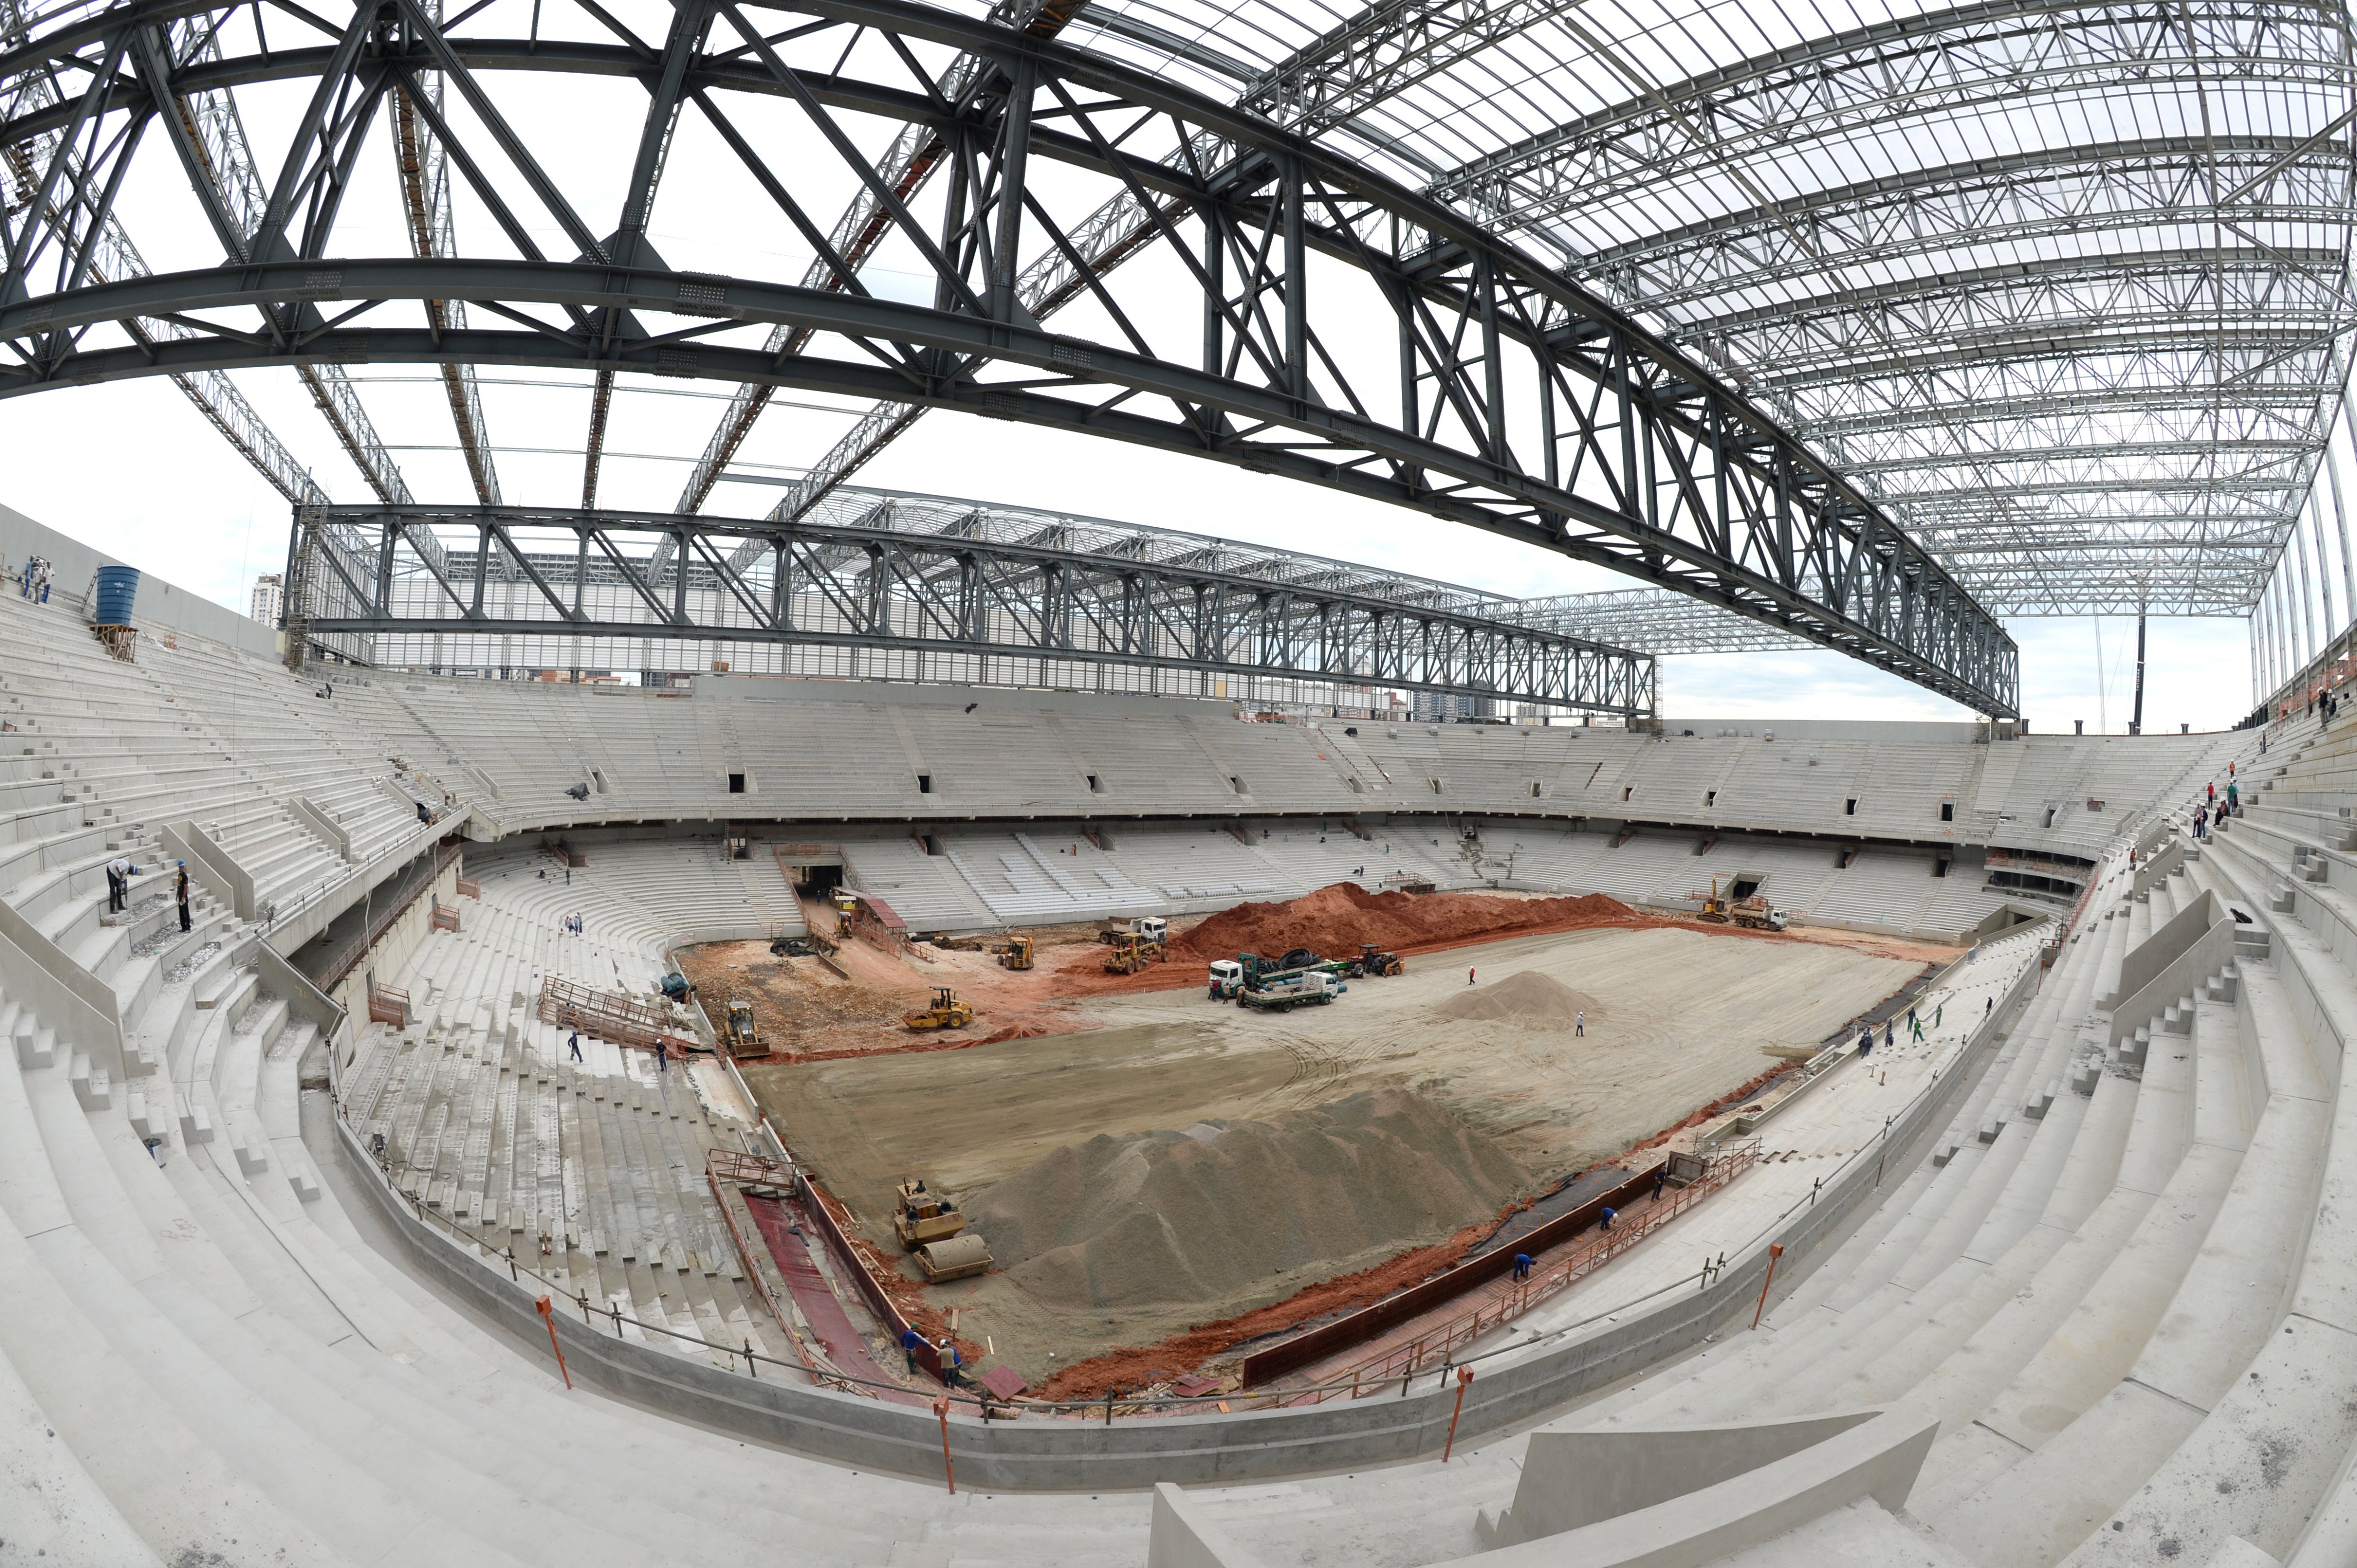 The stadium 'Arena da Baixada' under construction in Curitiba, Brazil, December 14, 2013. (Marcus Brandt—picture-alliance/DPA/AP)